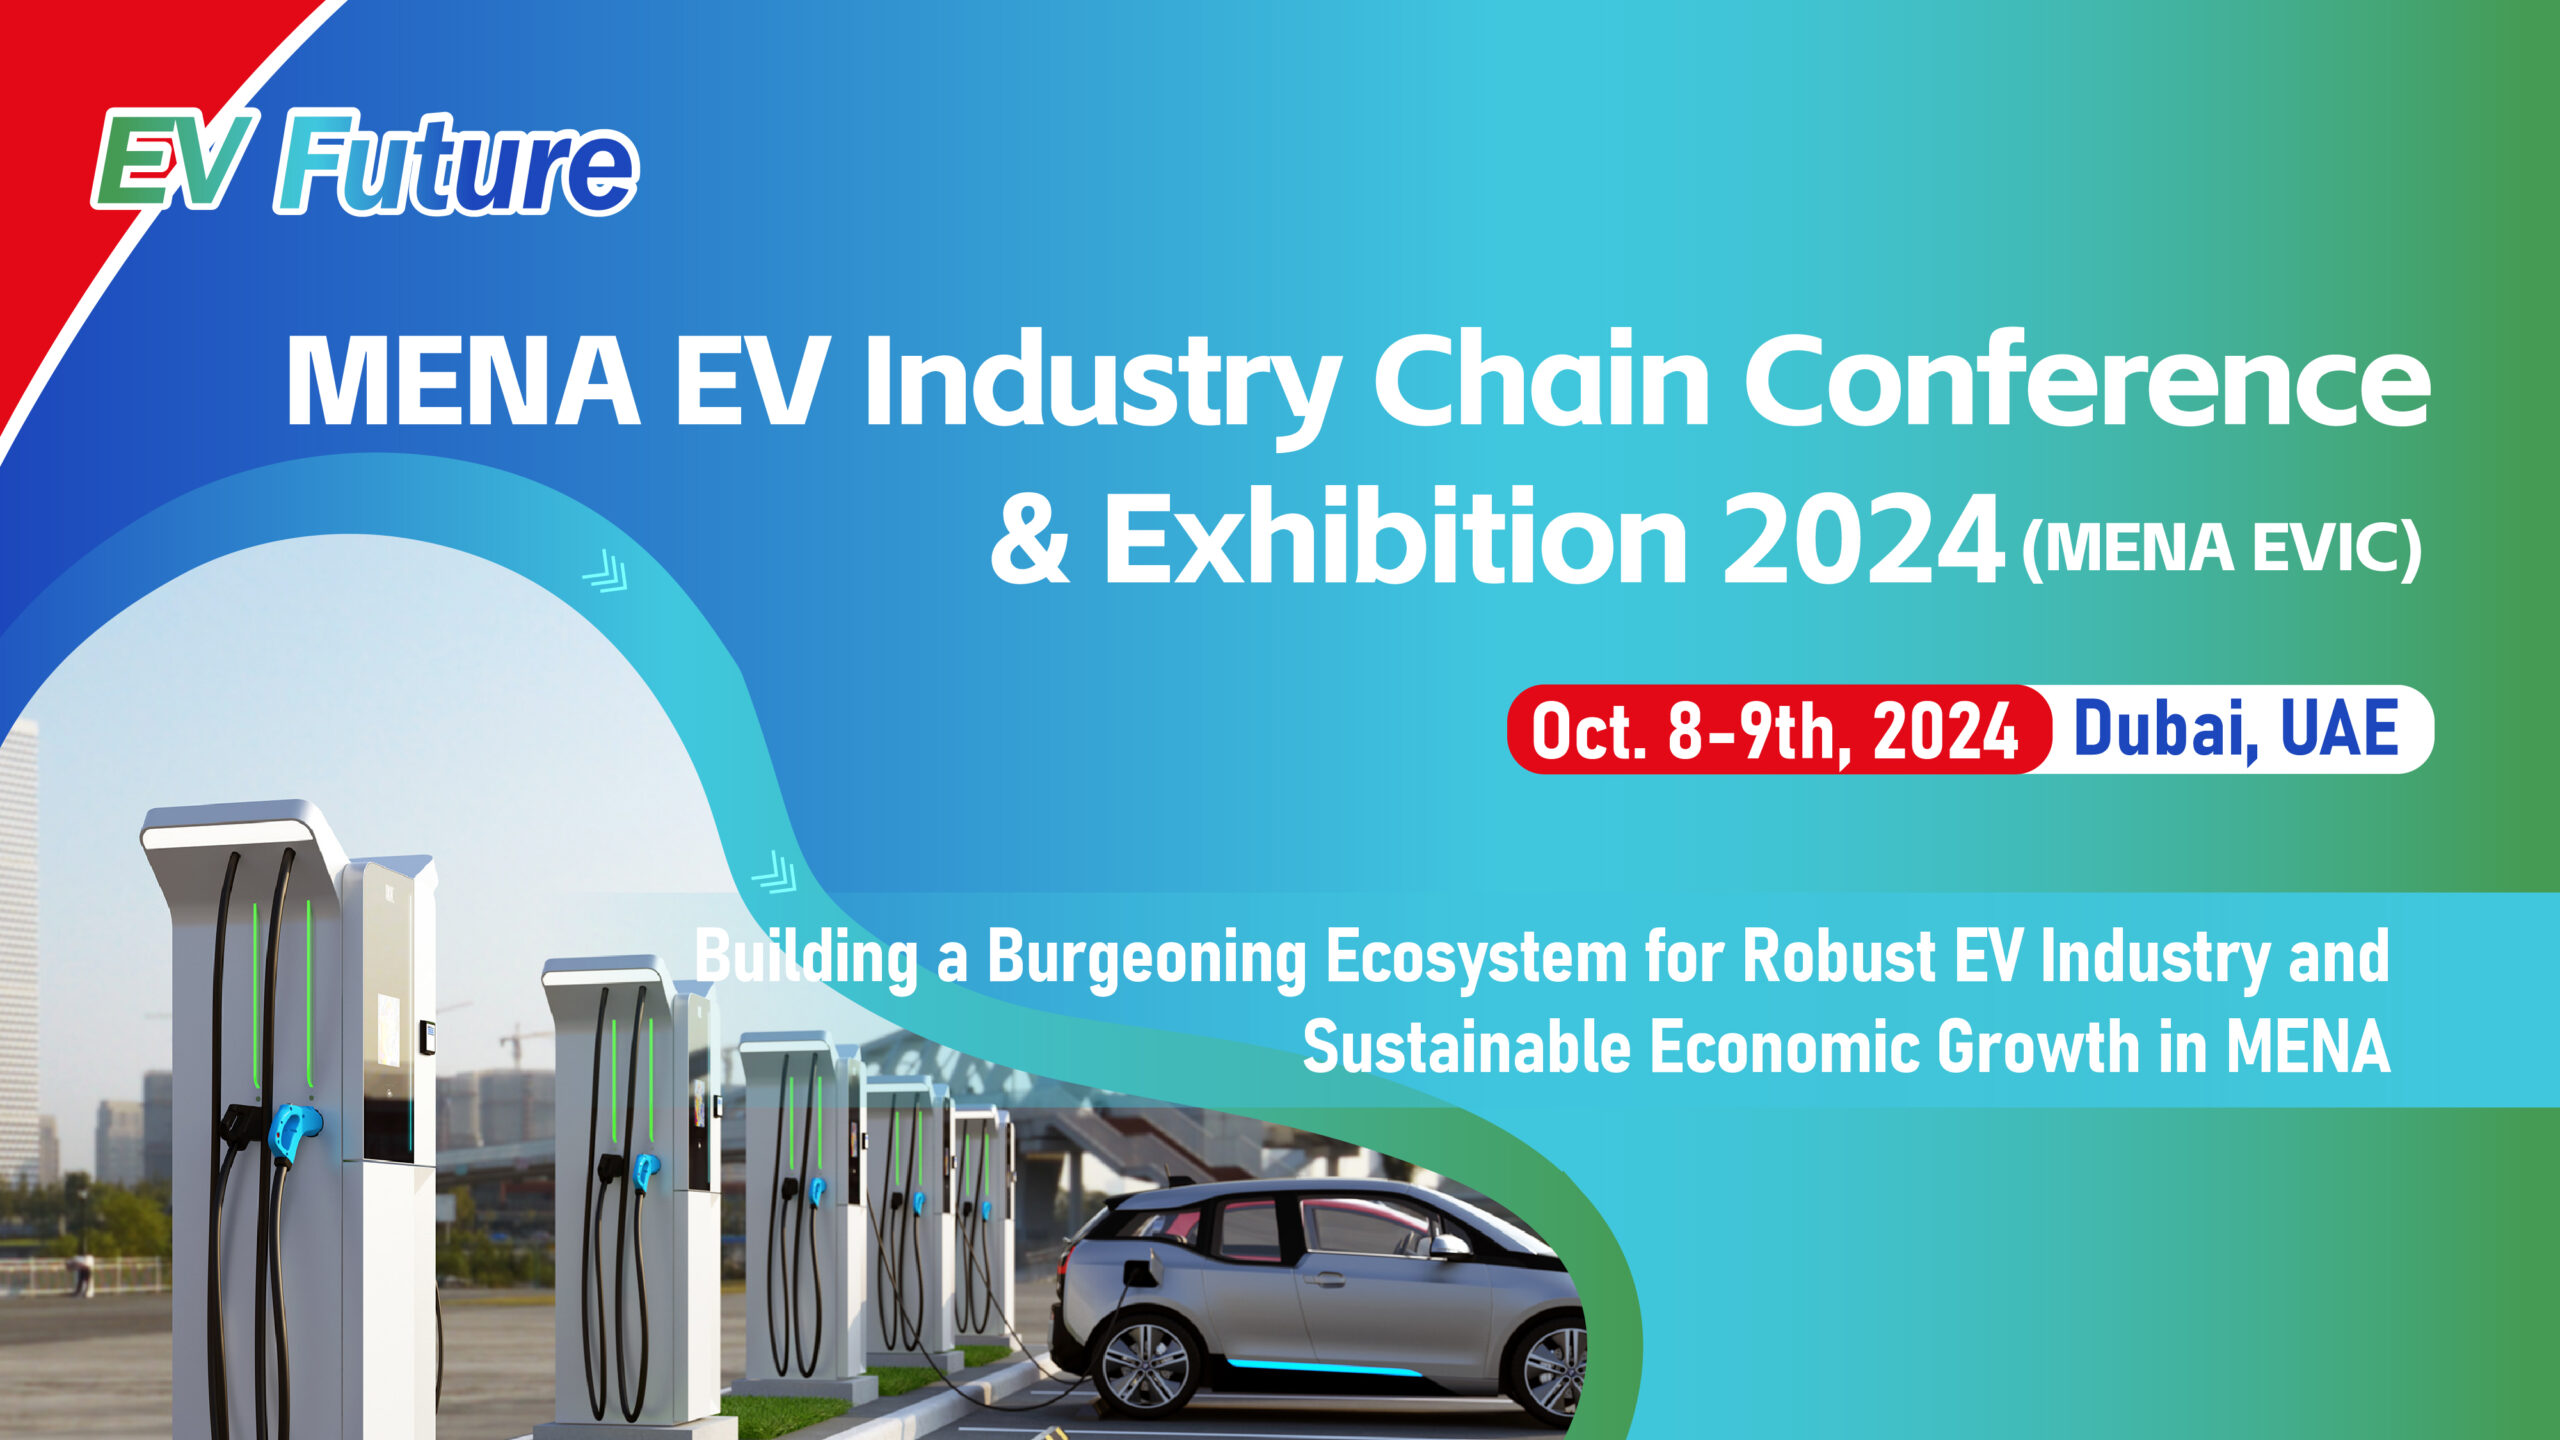 MENA EV Industry Chain Conference & Exhibition (MENA EVIC), Dubai, UAE, Oct. 8-9th, 2024